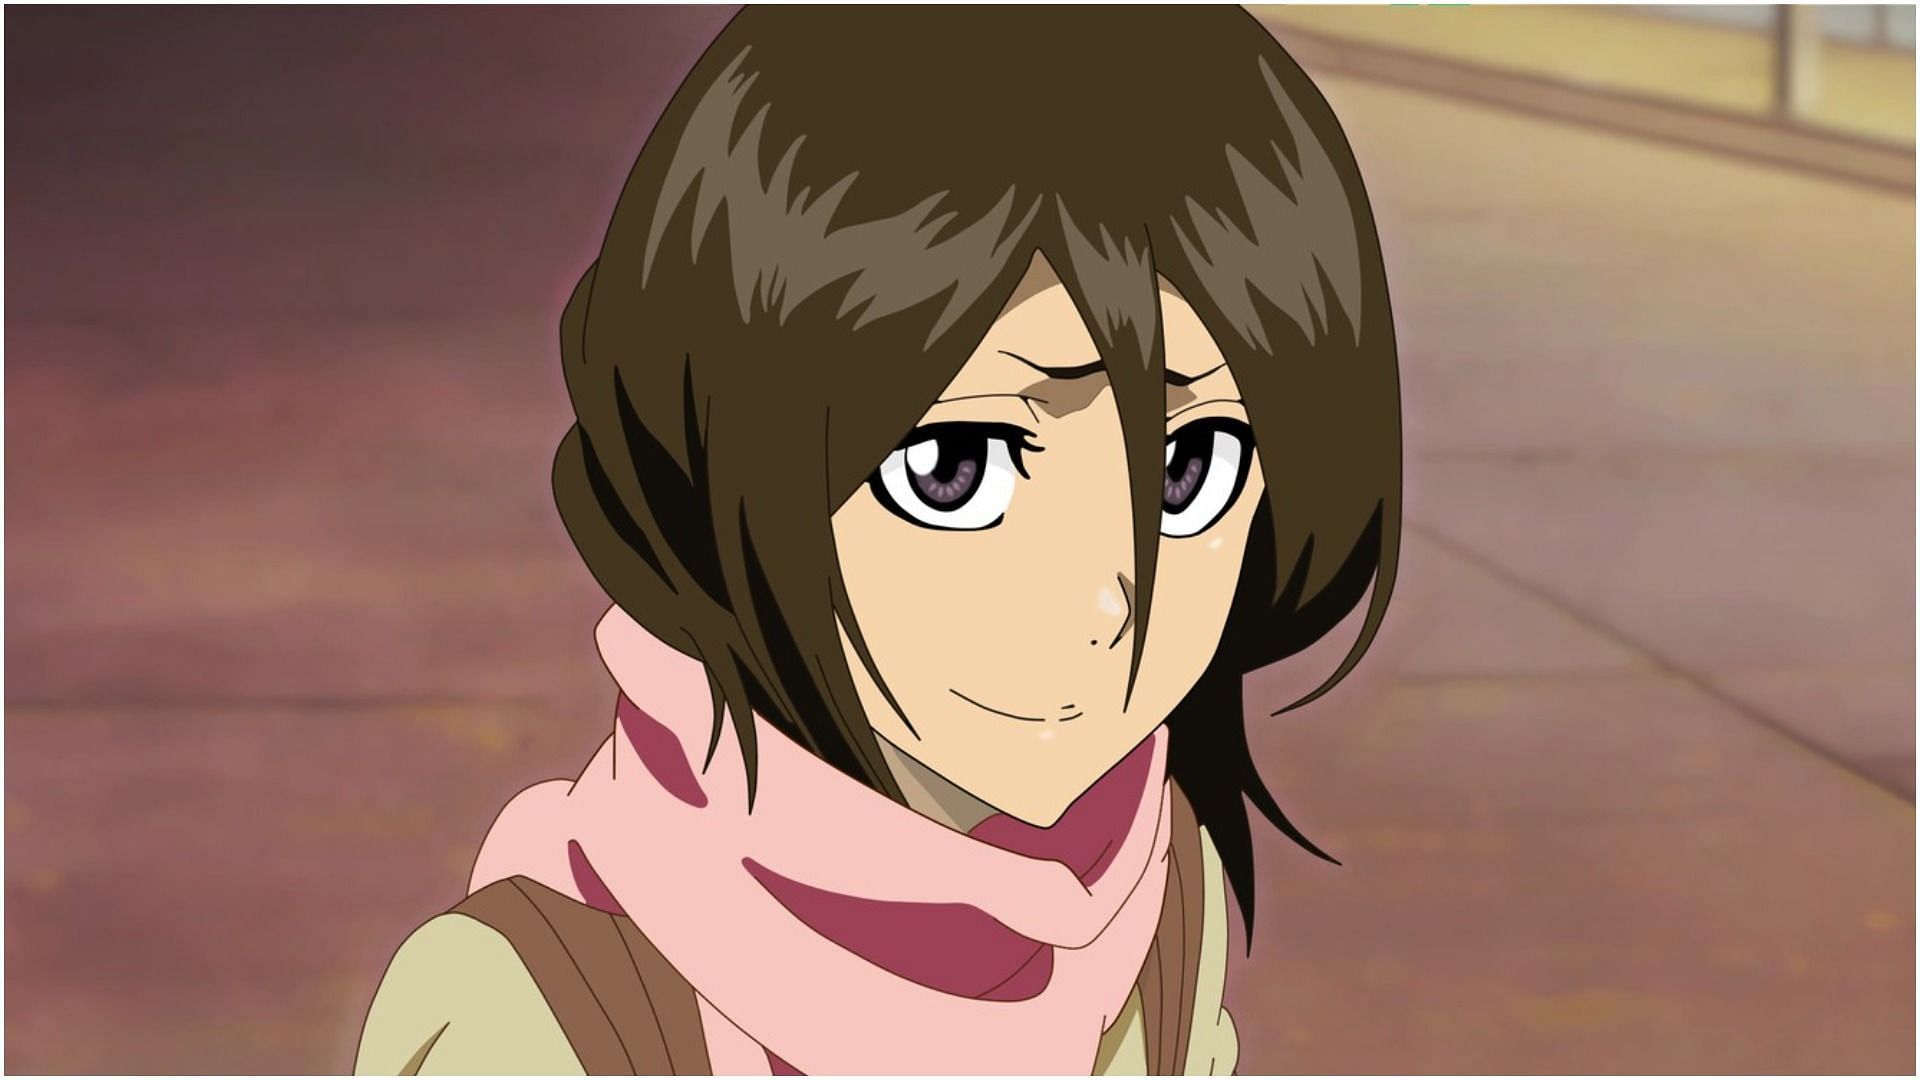 Rukia Kuchiki as seen in the anime (Image via Studio Pierrot)